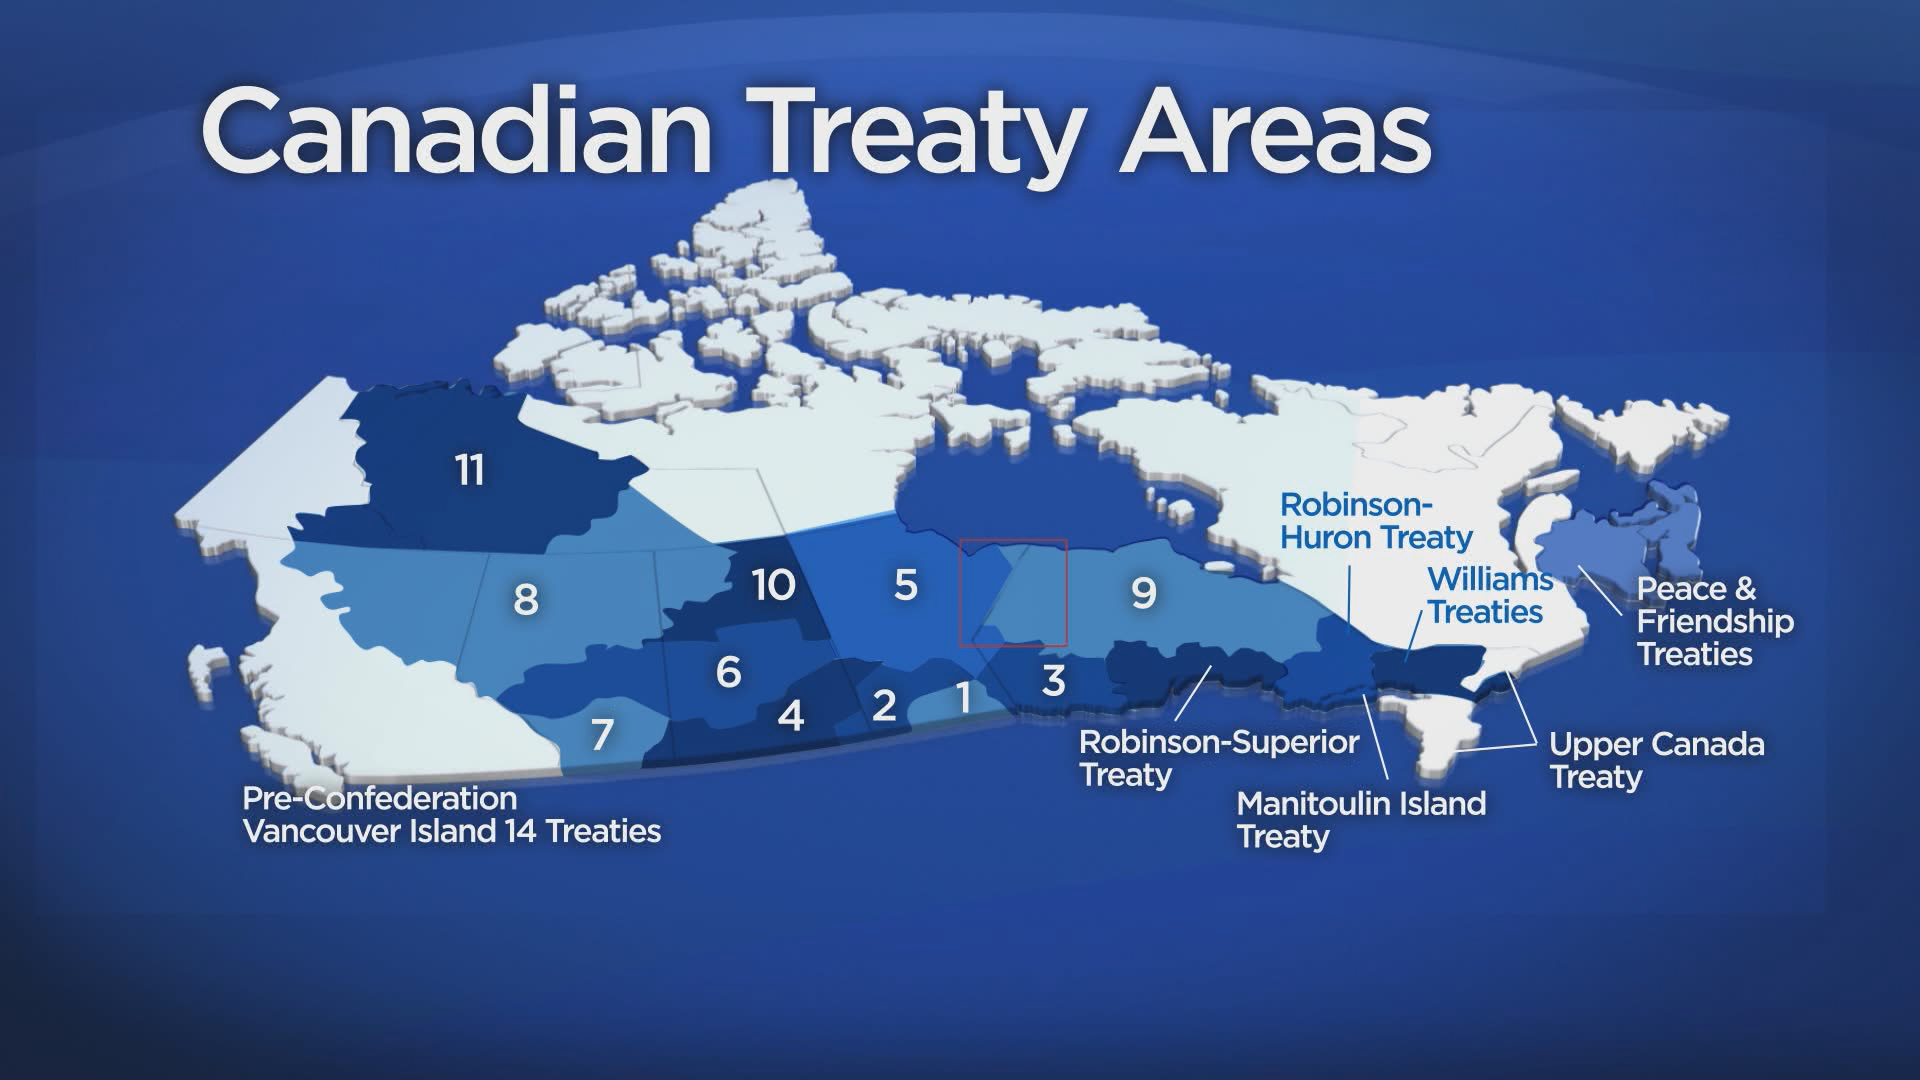 Map gap: Where are treaty boundaries on digital maps? - image